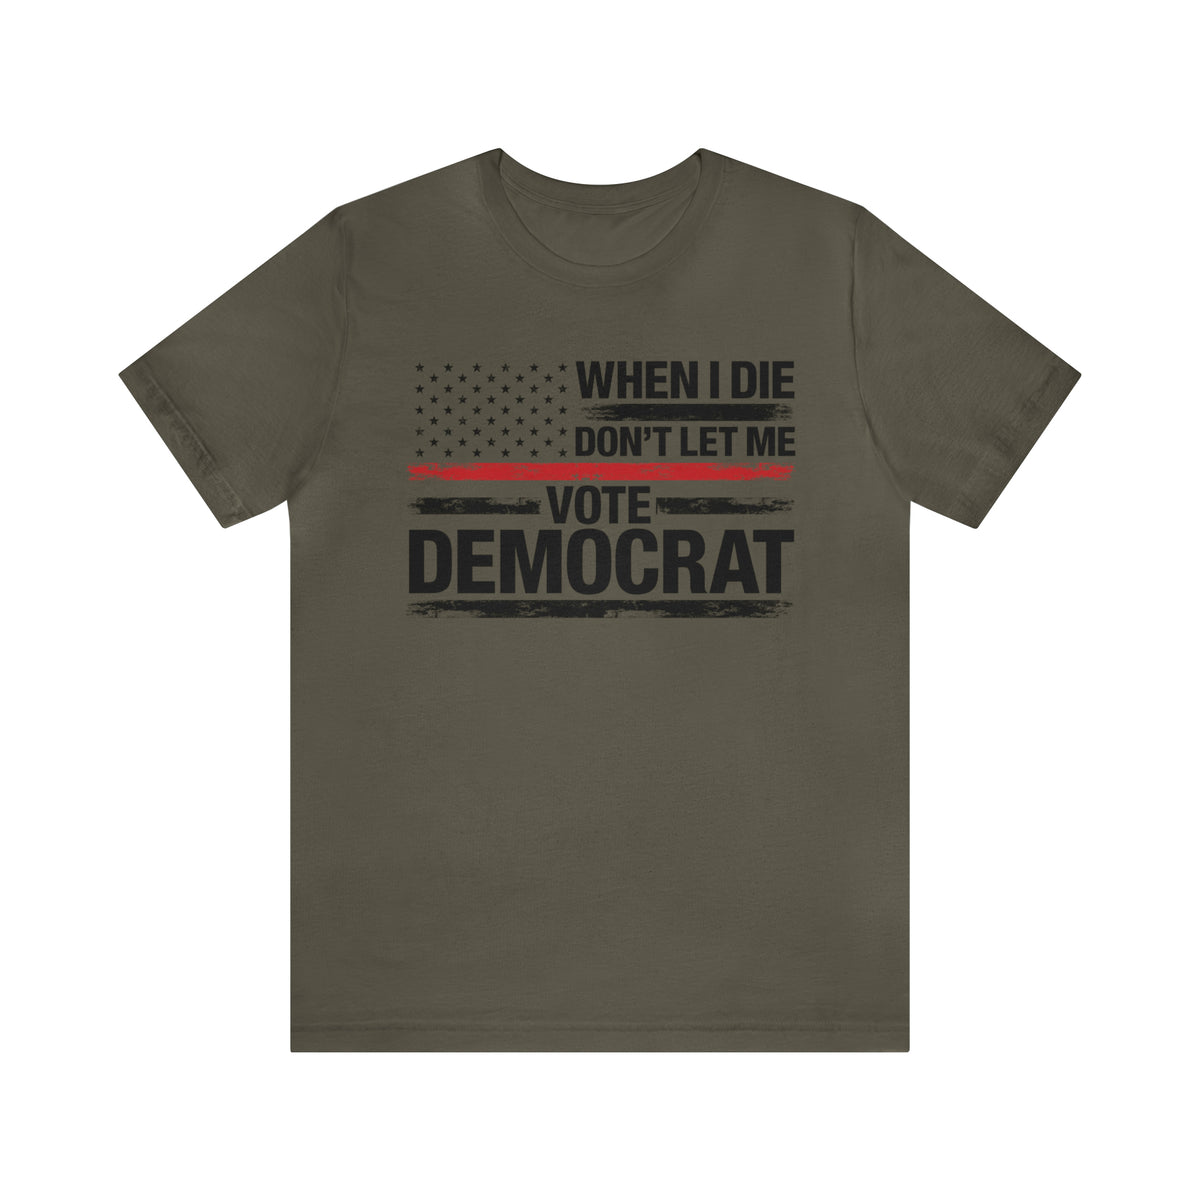 When I Die Don't Let Me Vote Democrat T-Shirt